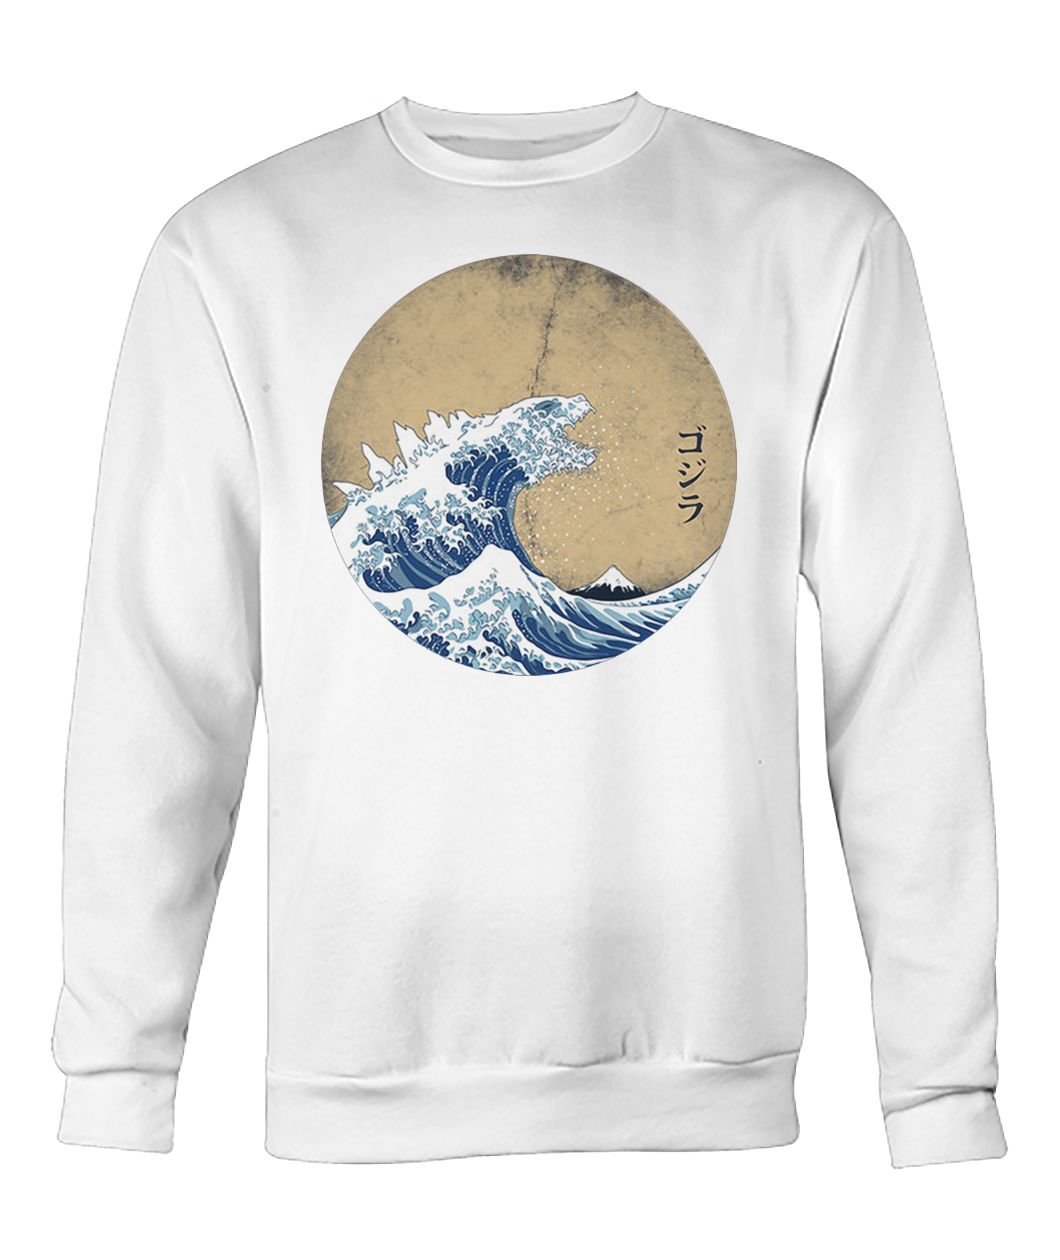 The great wave off kanagawa godzilla crew neck sweatshirt